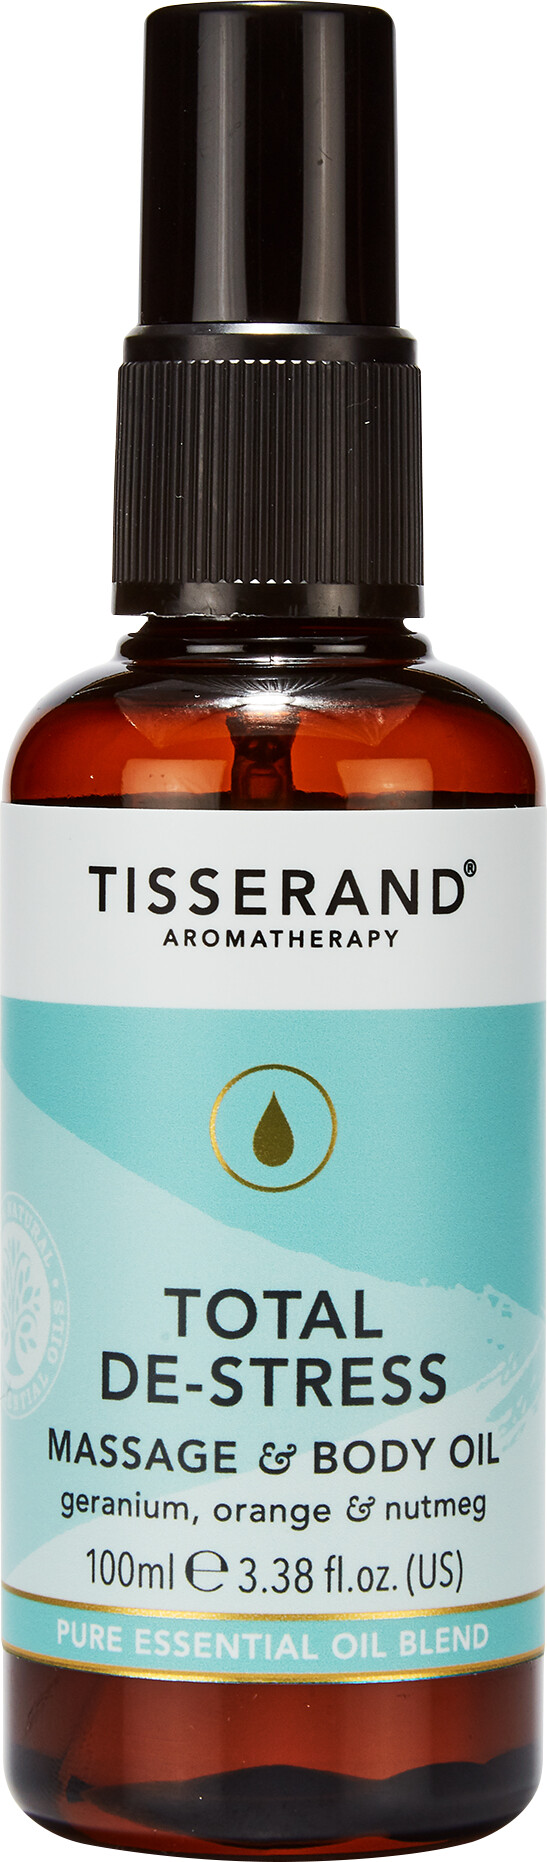 Tisserand Aromatherapy Total De-Stress Massage & Body Oil 100ml